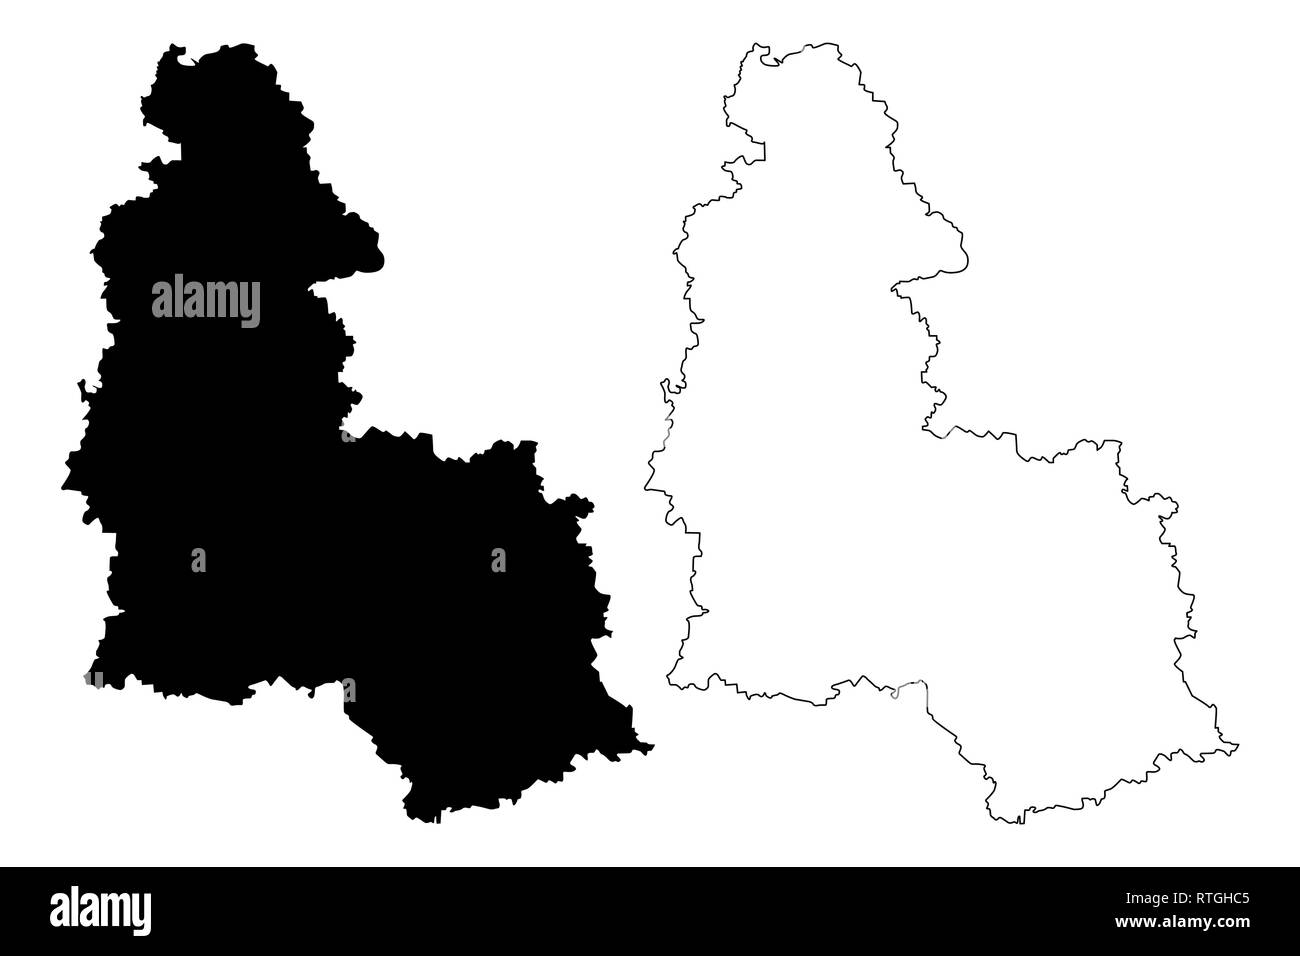 Kharkov Oblast (administrative divisions in der Ukraine, Oblast der Ukraine) Karte Vektor-illustration, kritzeln Skizze Sumshchyna Karte Stock Vektor